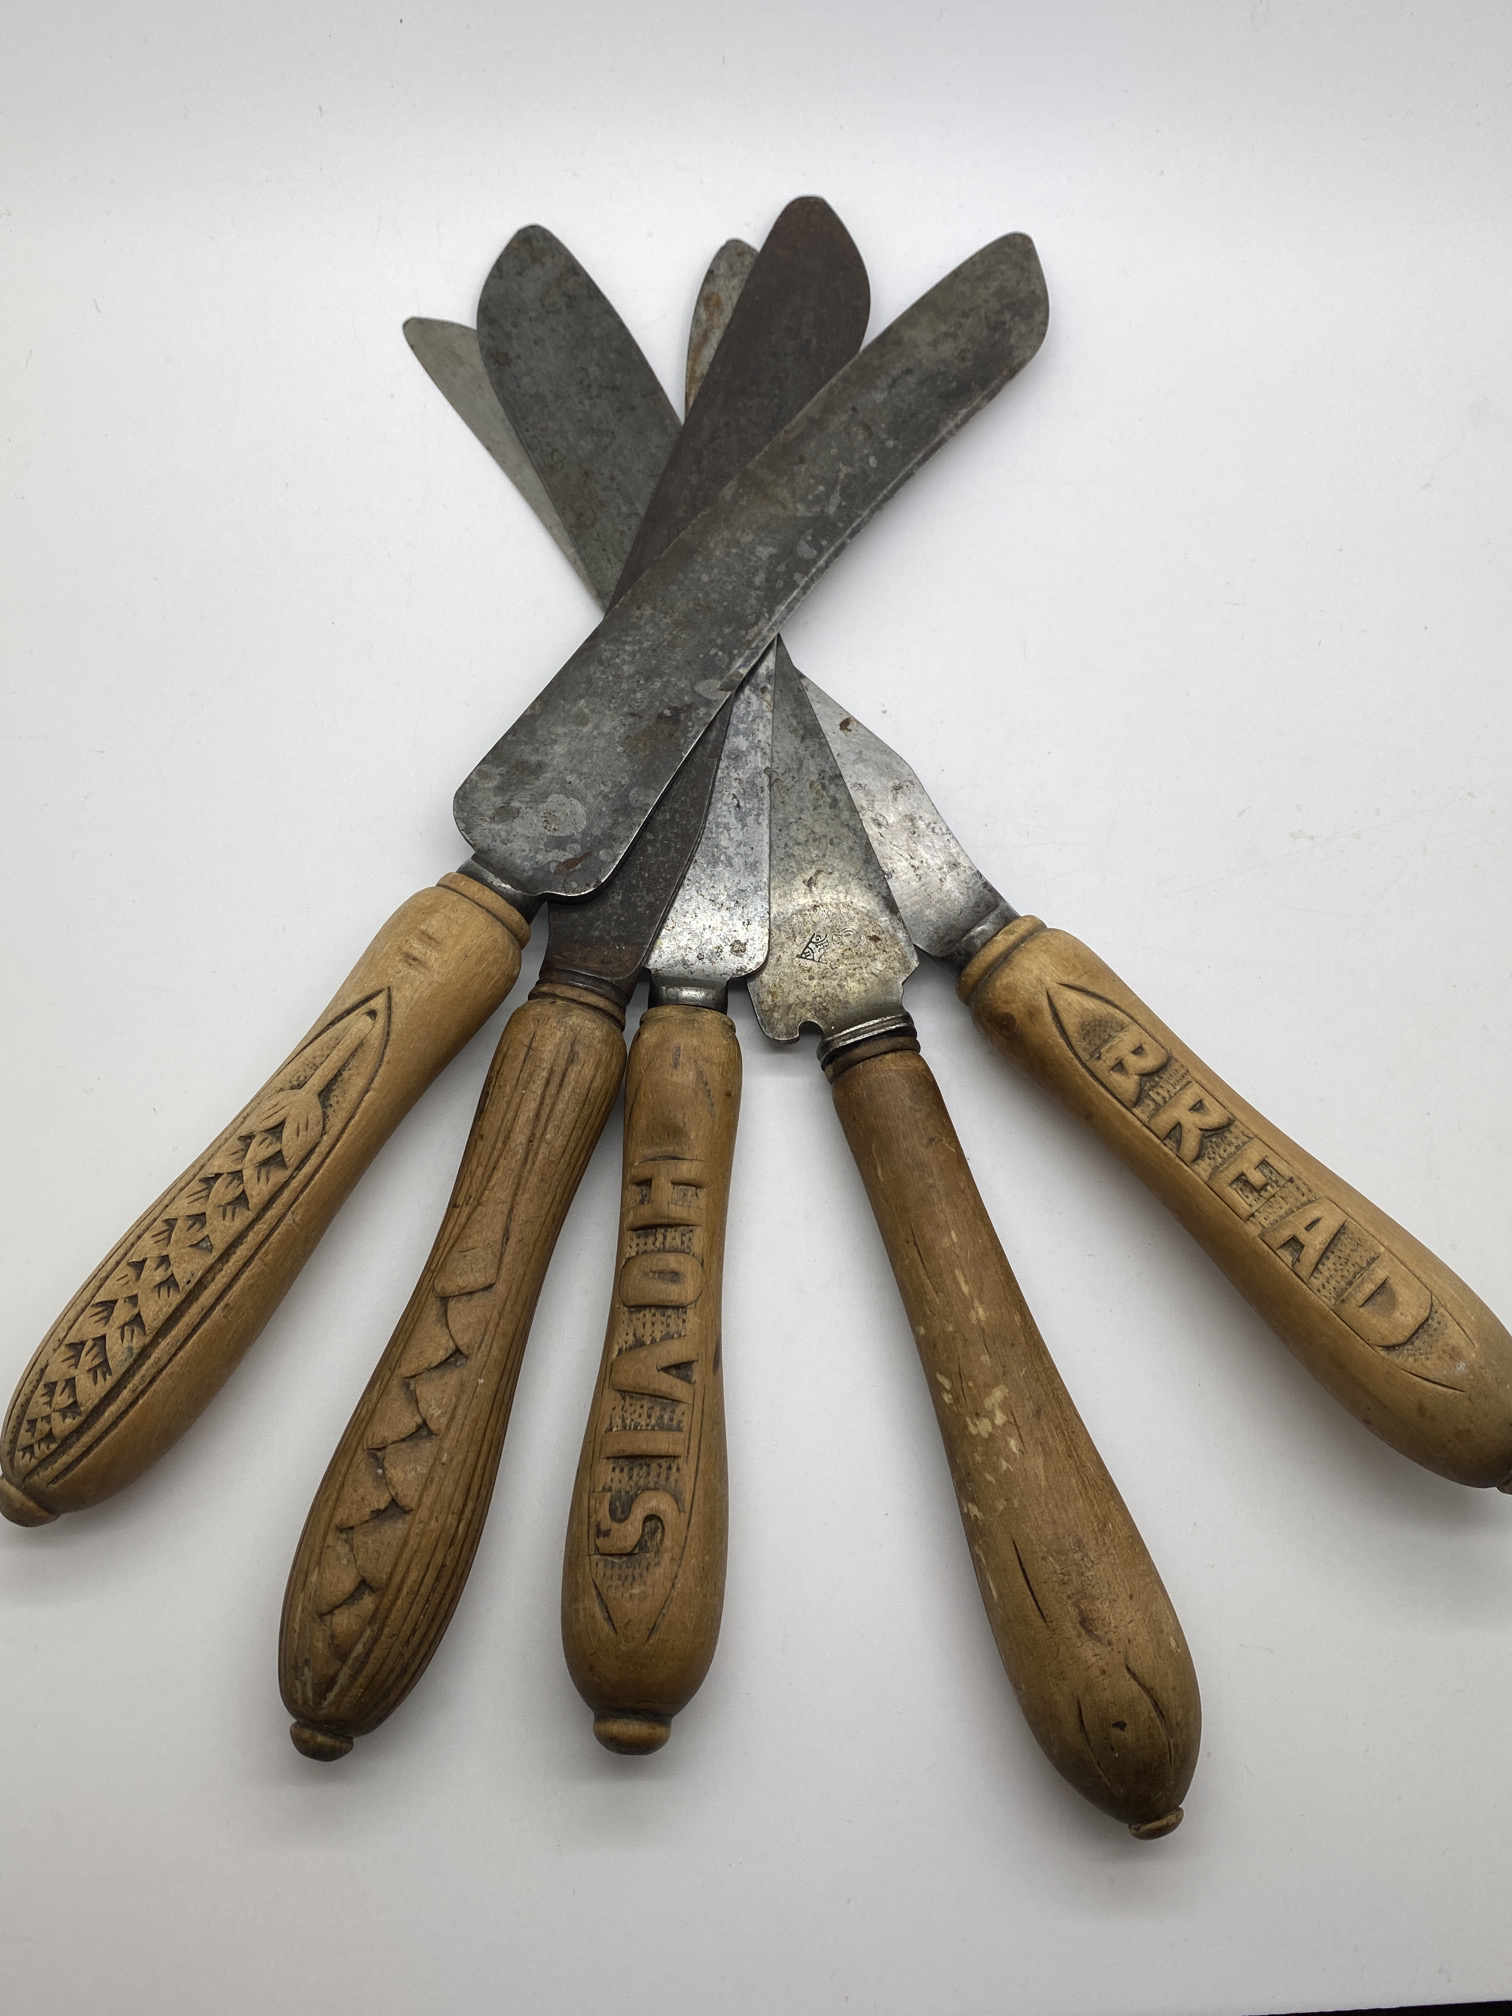 5 x ANTIQUE 1930's BREAD KNIVES INCLUDING HOVIS & BREAD - INC JOSEPH RODGERS - WHEAT SHEAF ETC